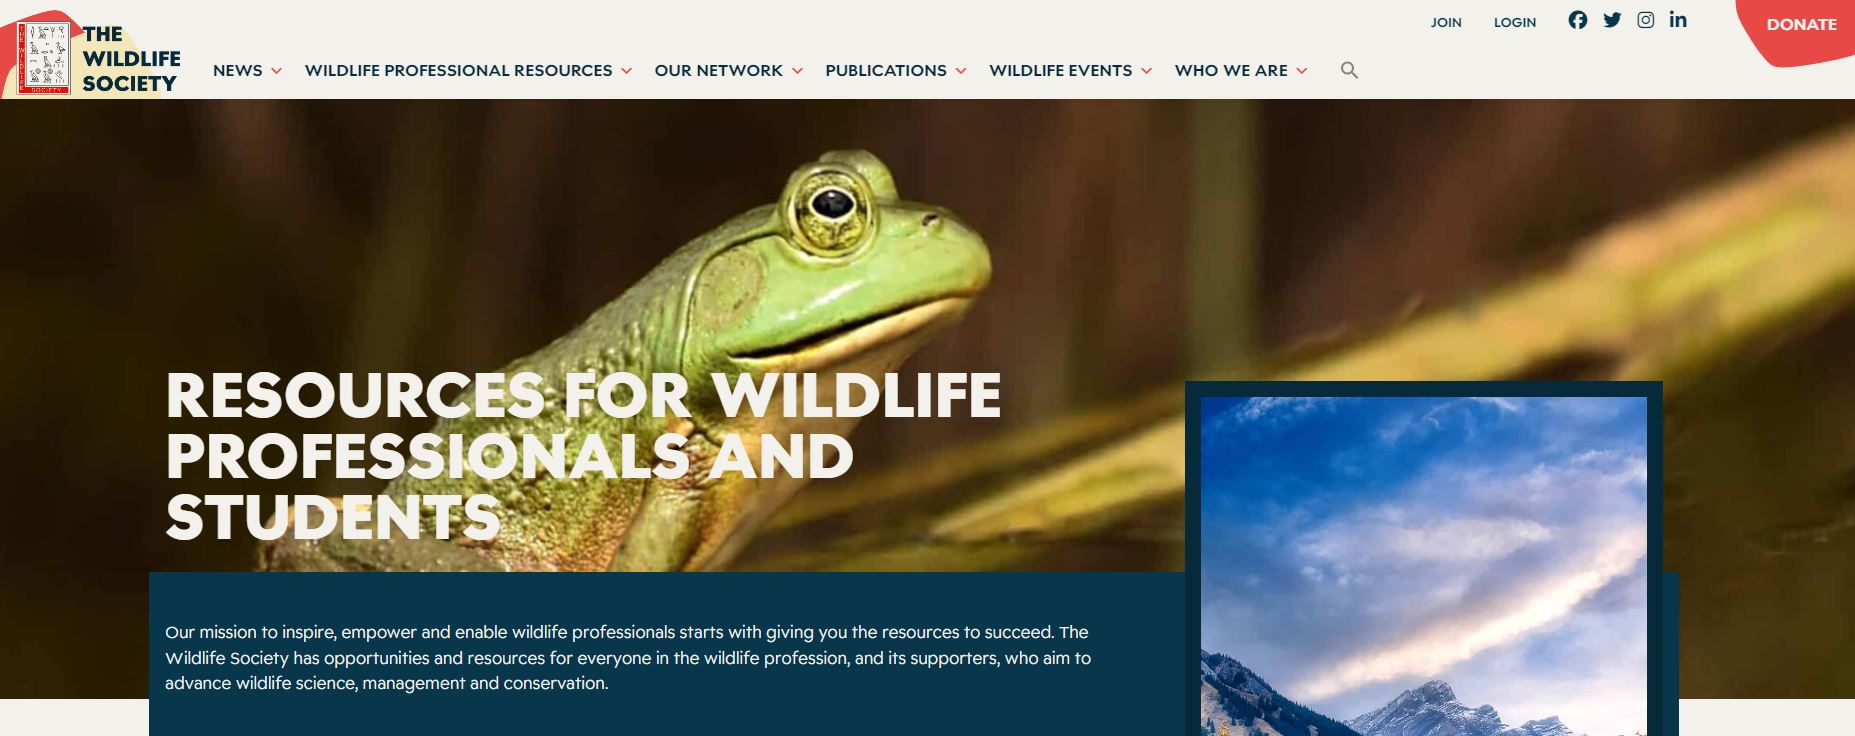 The Wildlife Society website